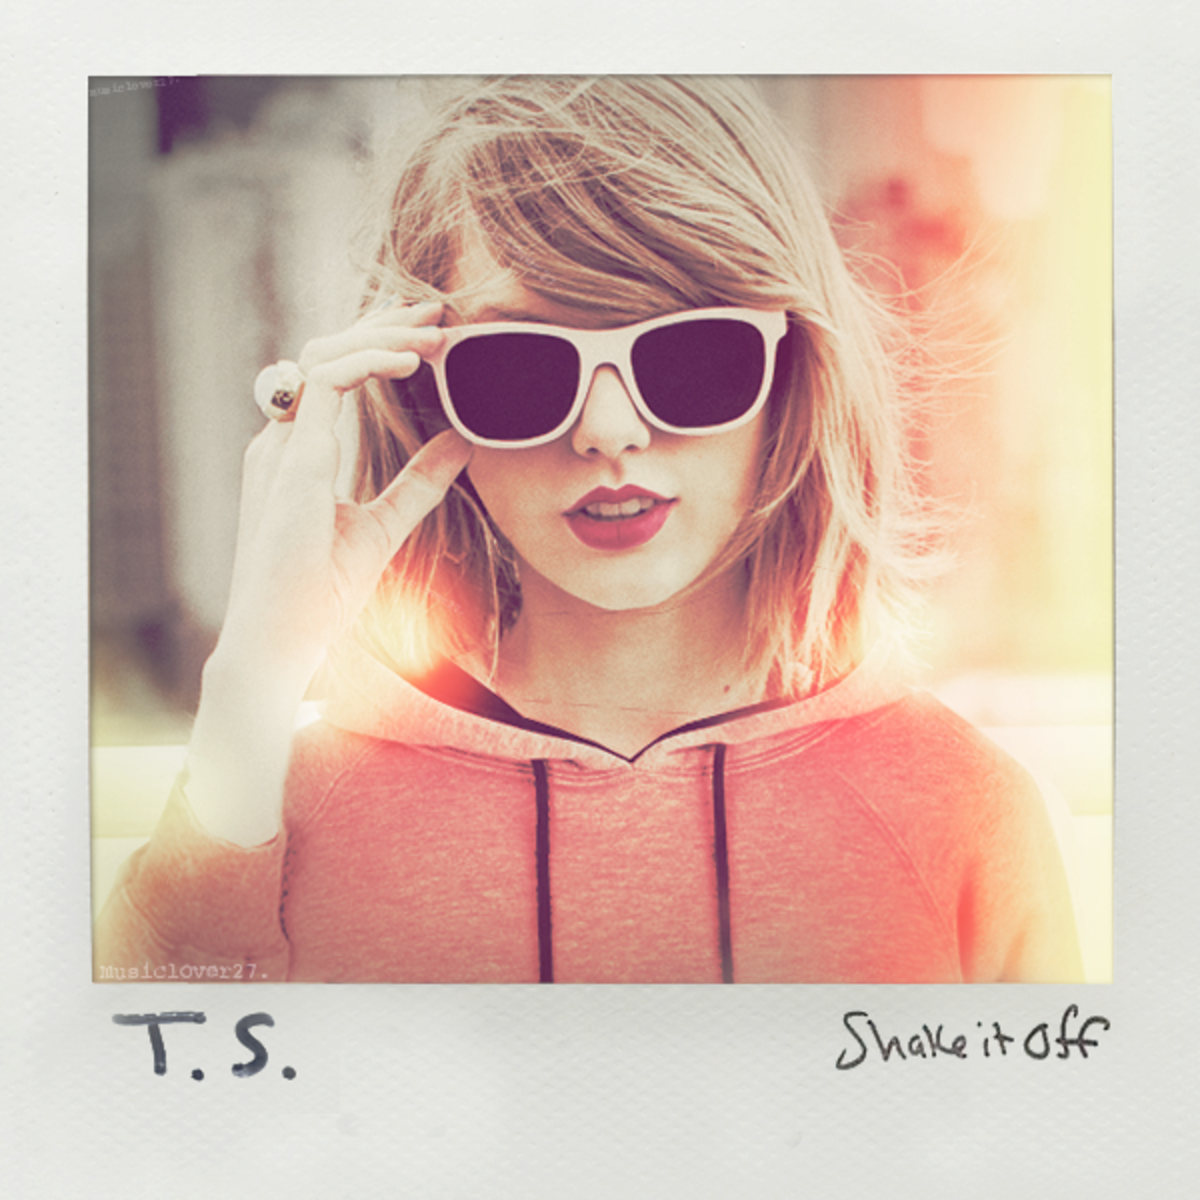 Шейк тейлор. Тейлор Свифт Шейк. Taylor Swift Shake it off. Taylor Swift Shake it off обложка. Taylor Swift Shake it off 2014.